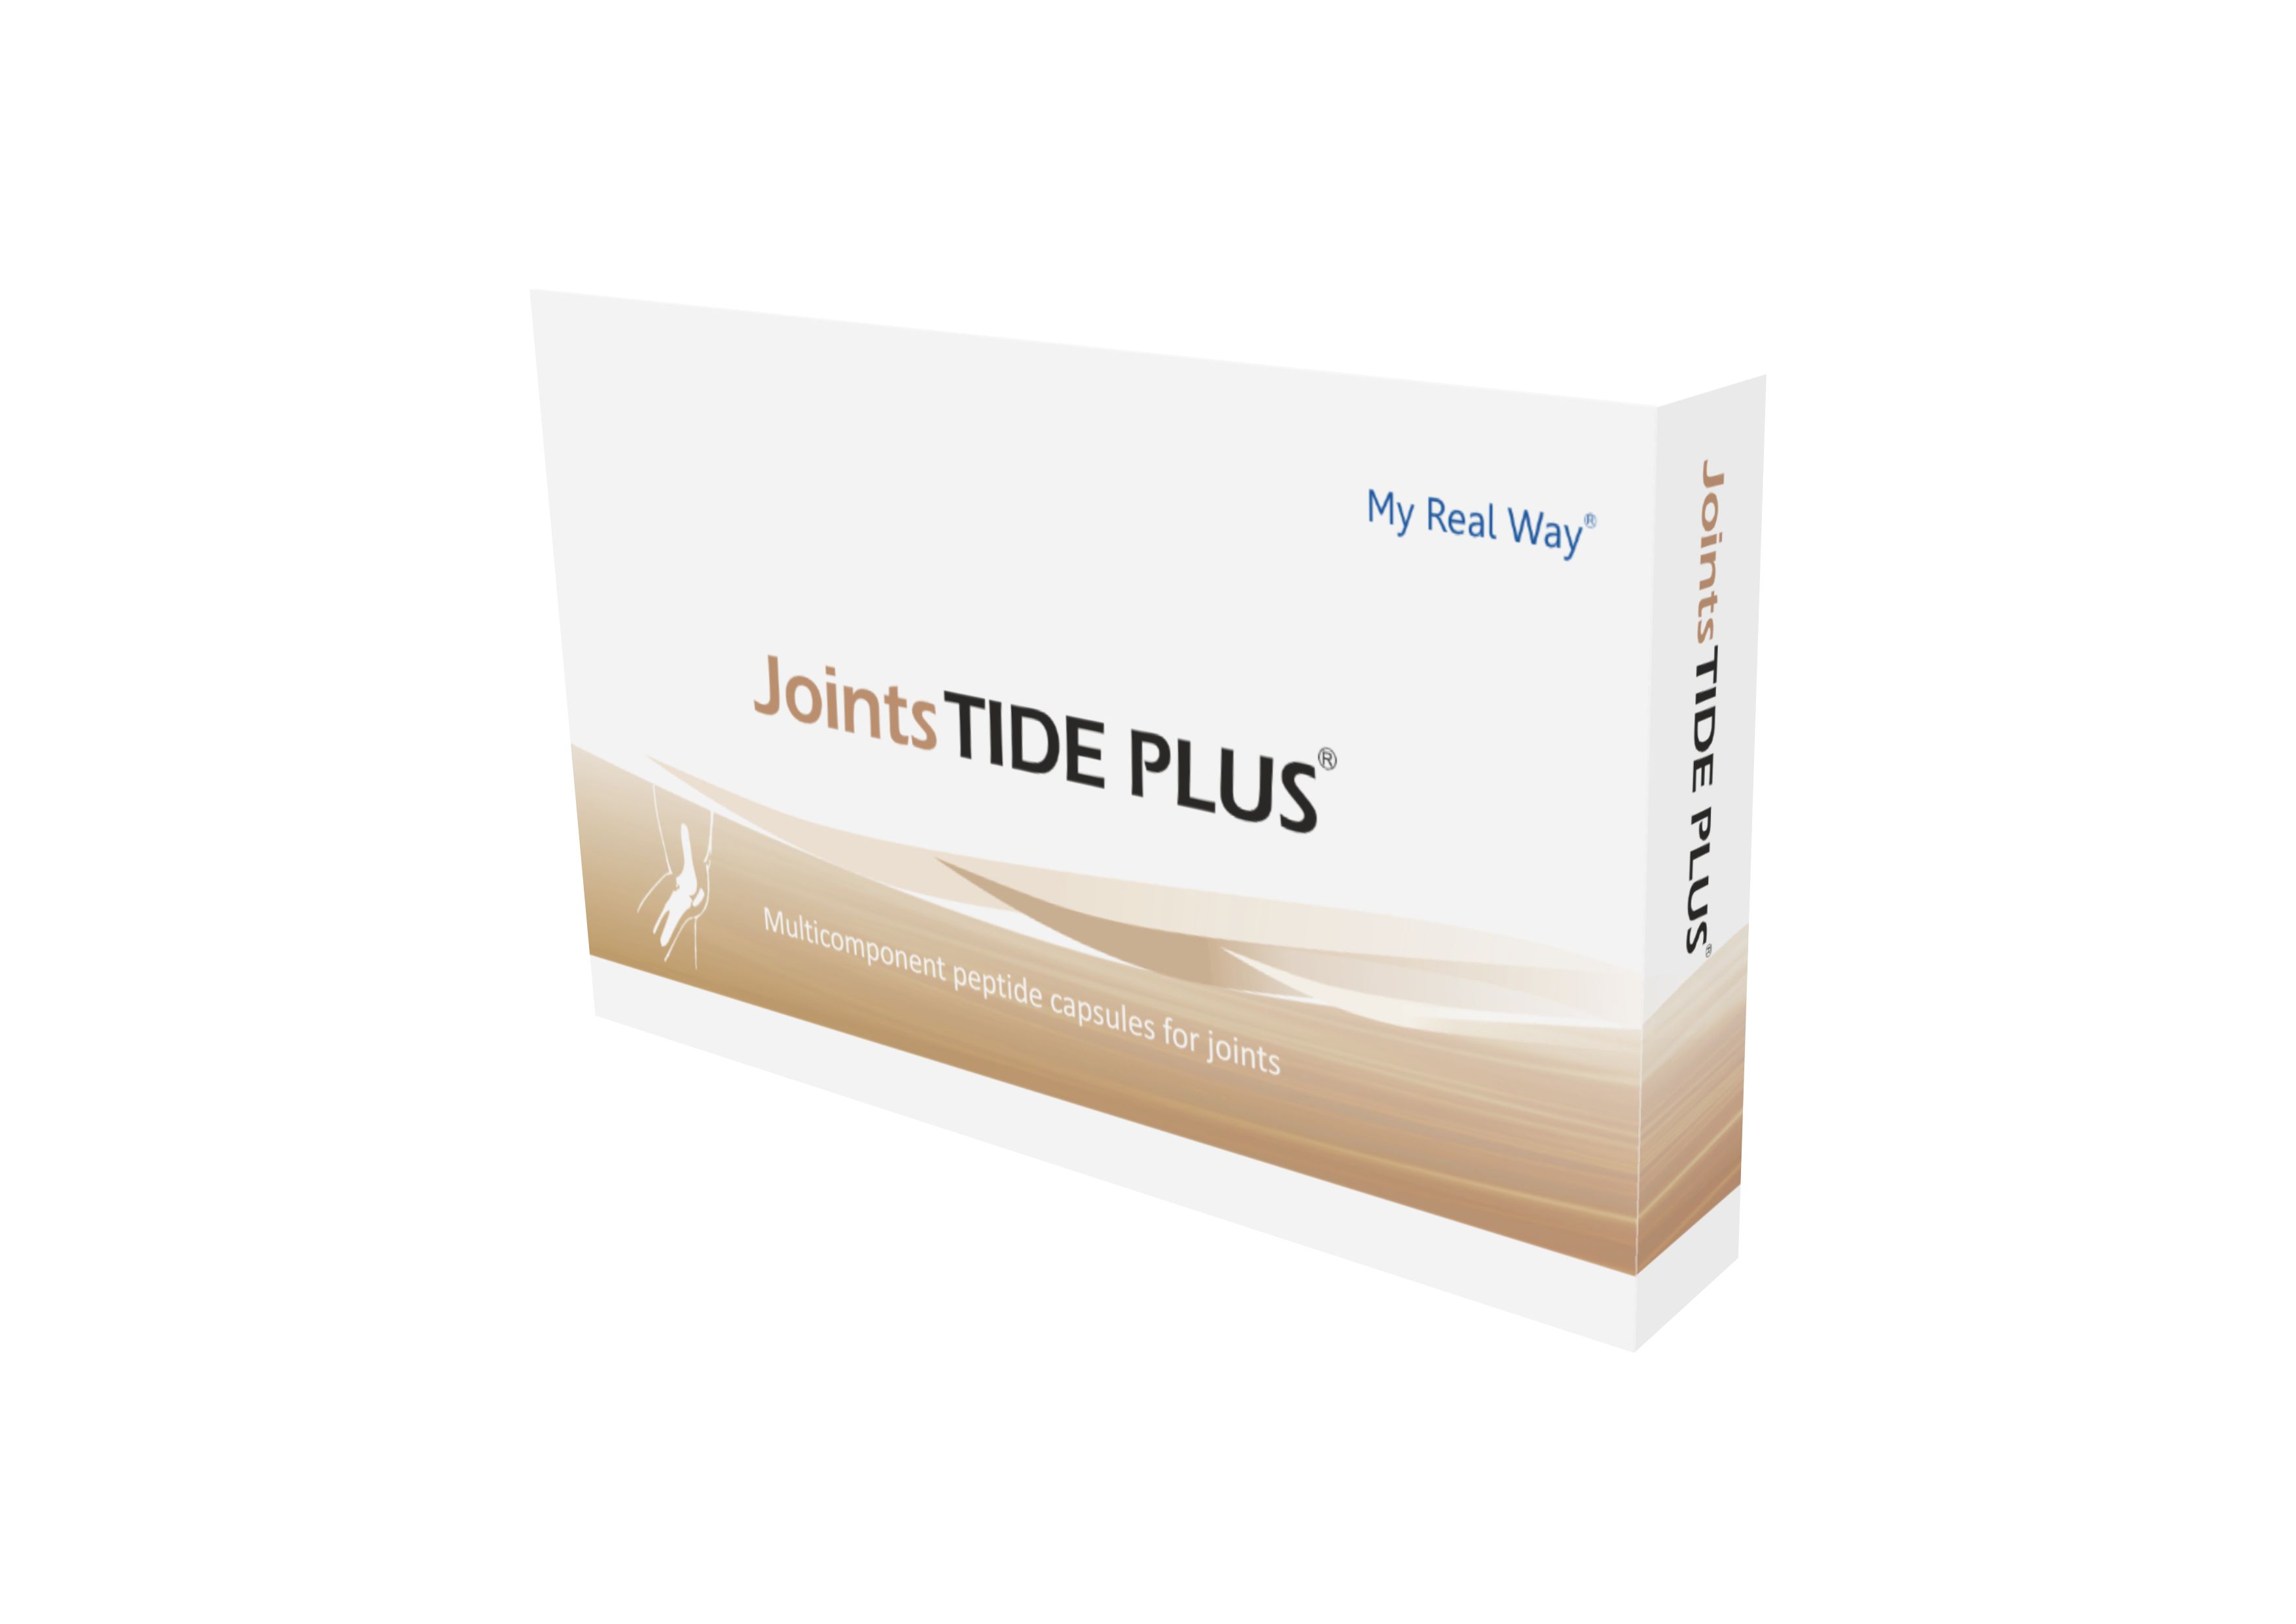 JointsTIDE PLUS peptides for joints